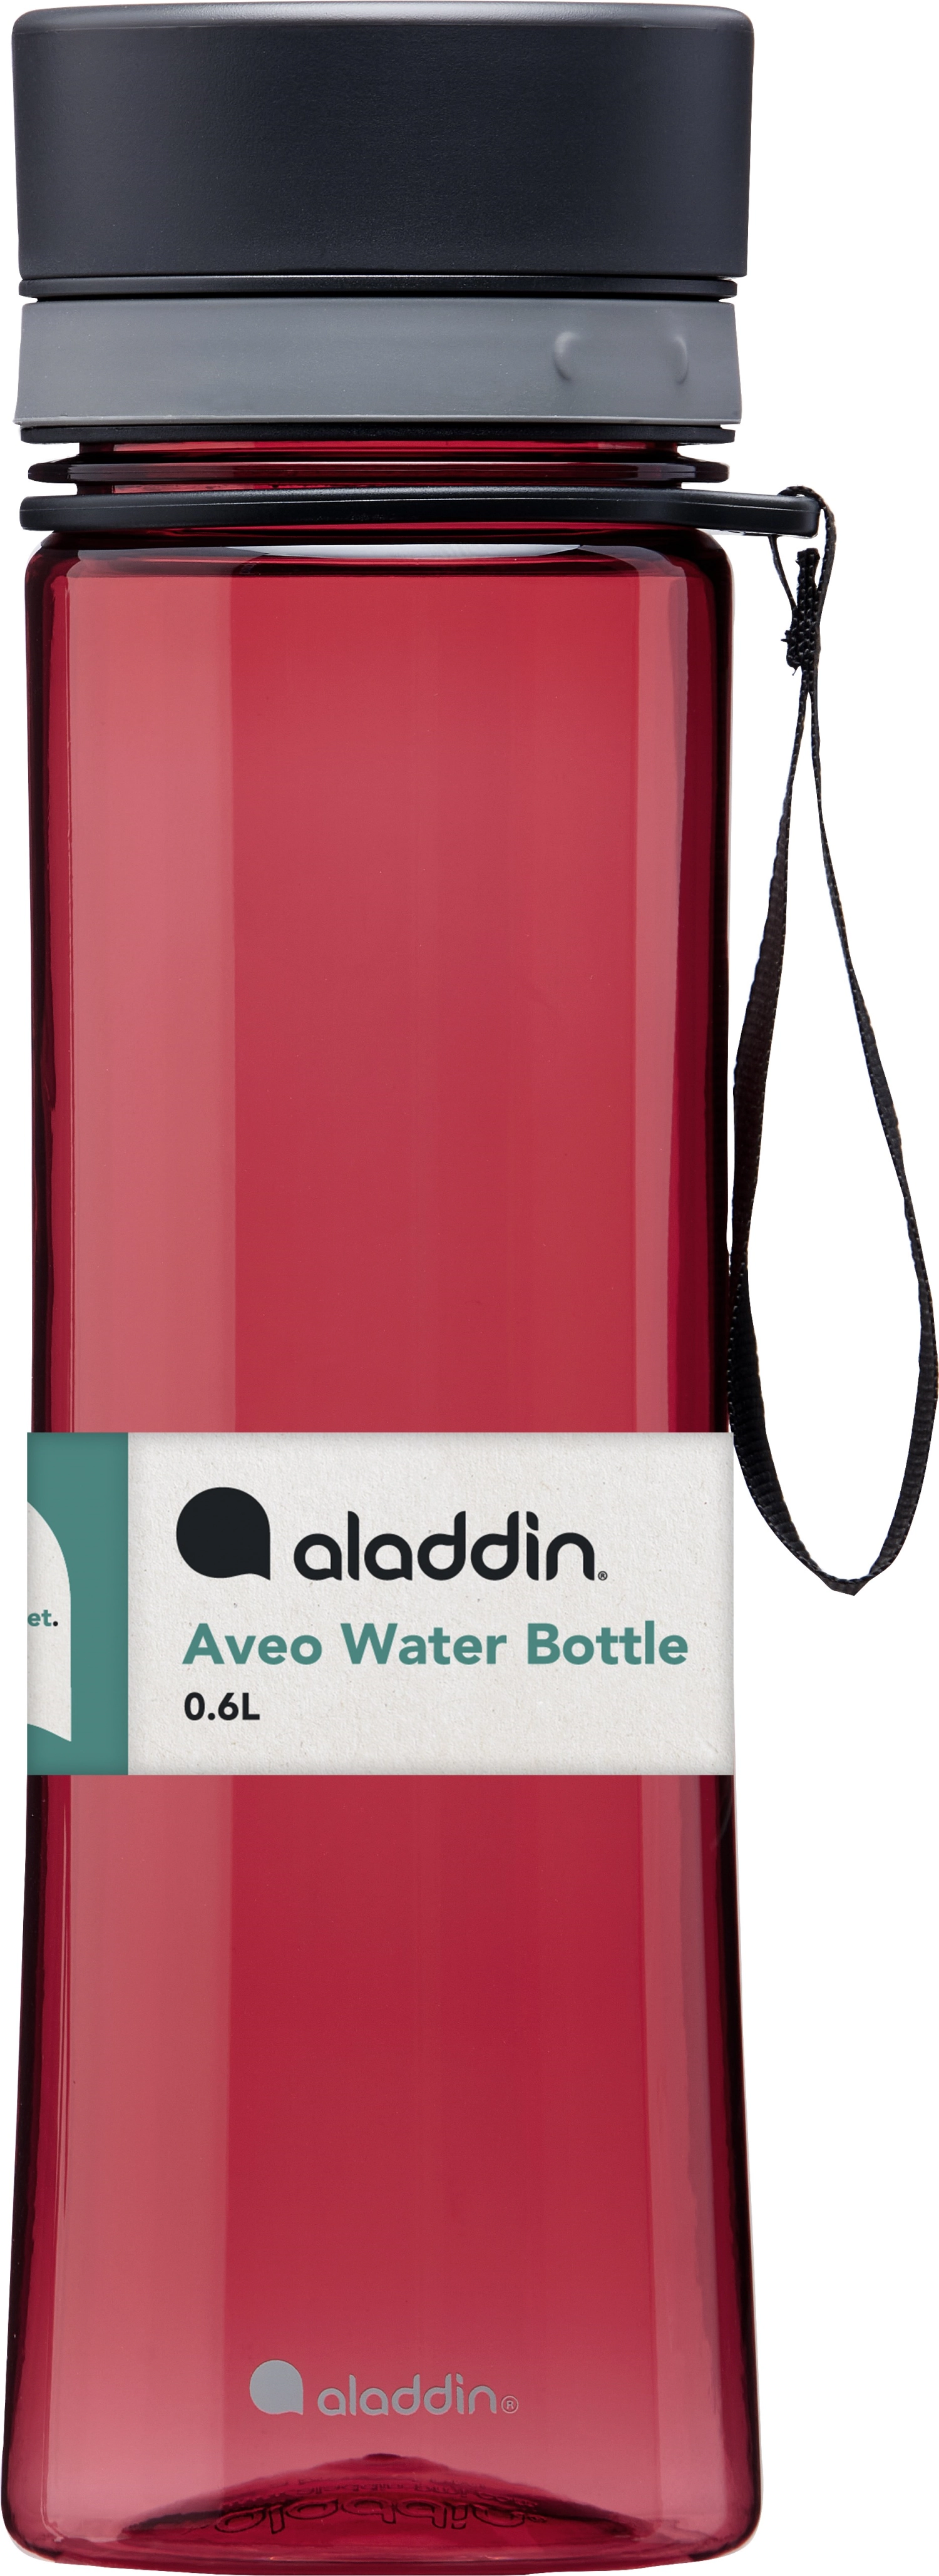 Aladdin aveo water bottle 0.6l cherry red